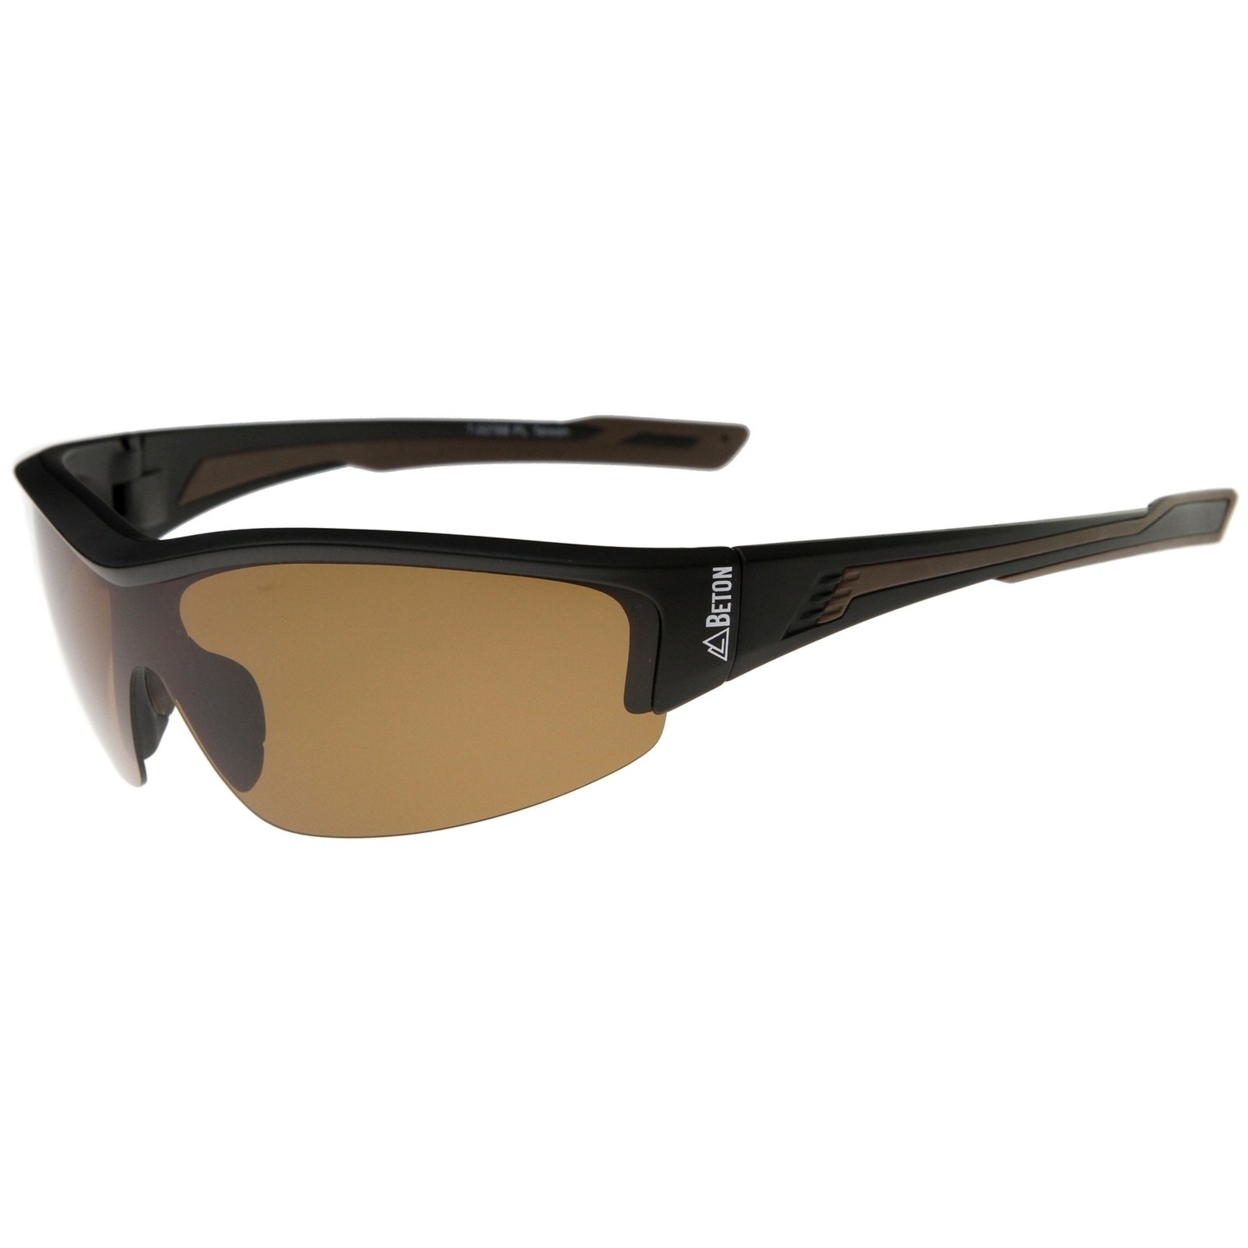 Rannier - Polarized Shatterproof Shield Lens TR-90 Semi-Rimless Sports Sunglasses 68mm - Matte Black / Brown